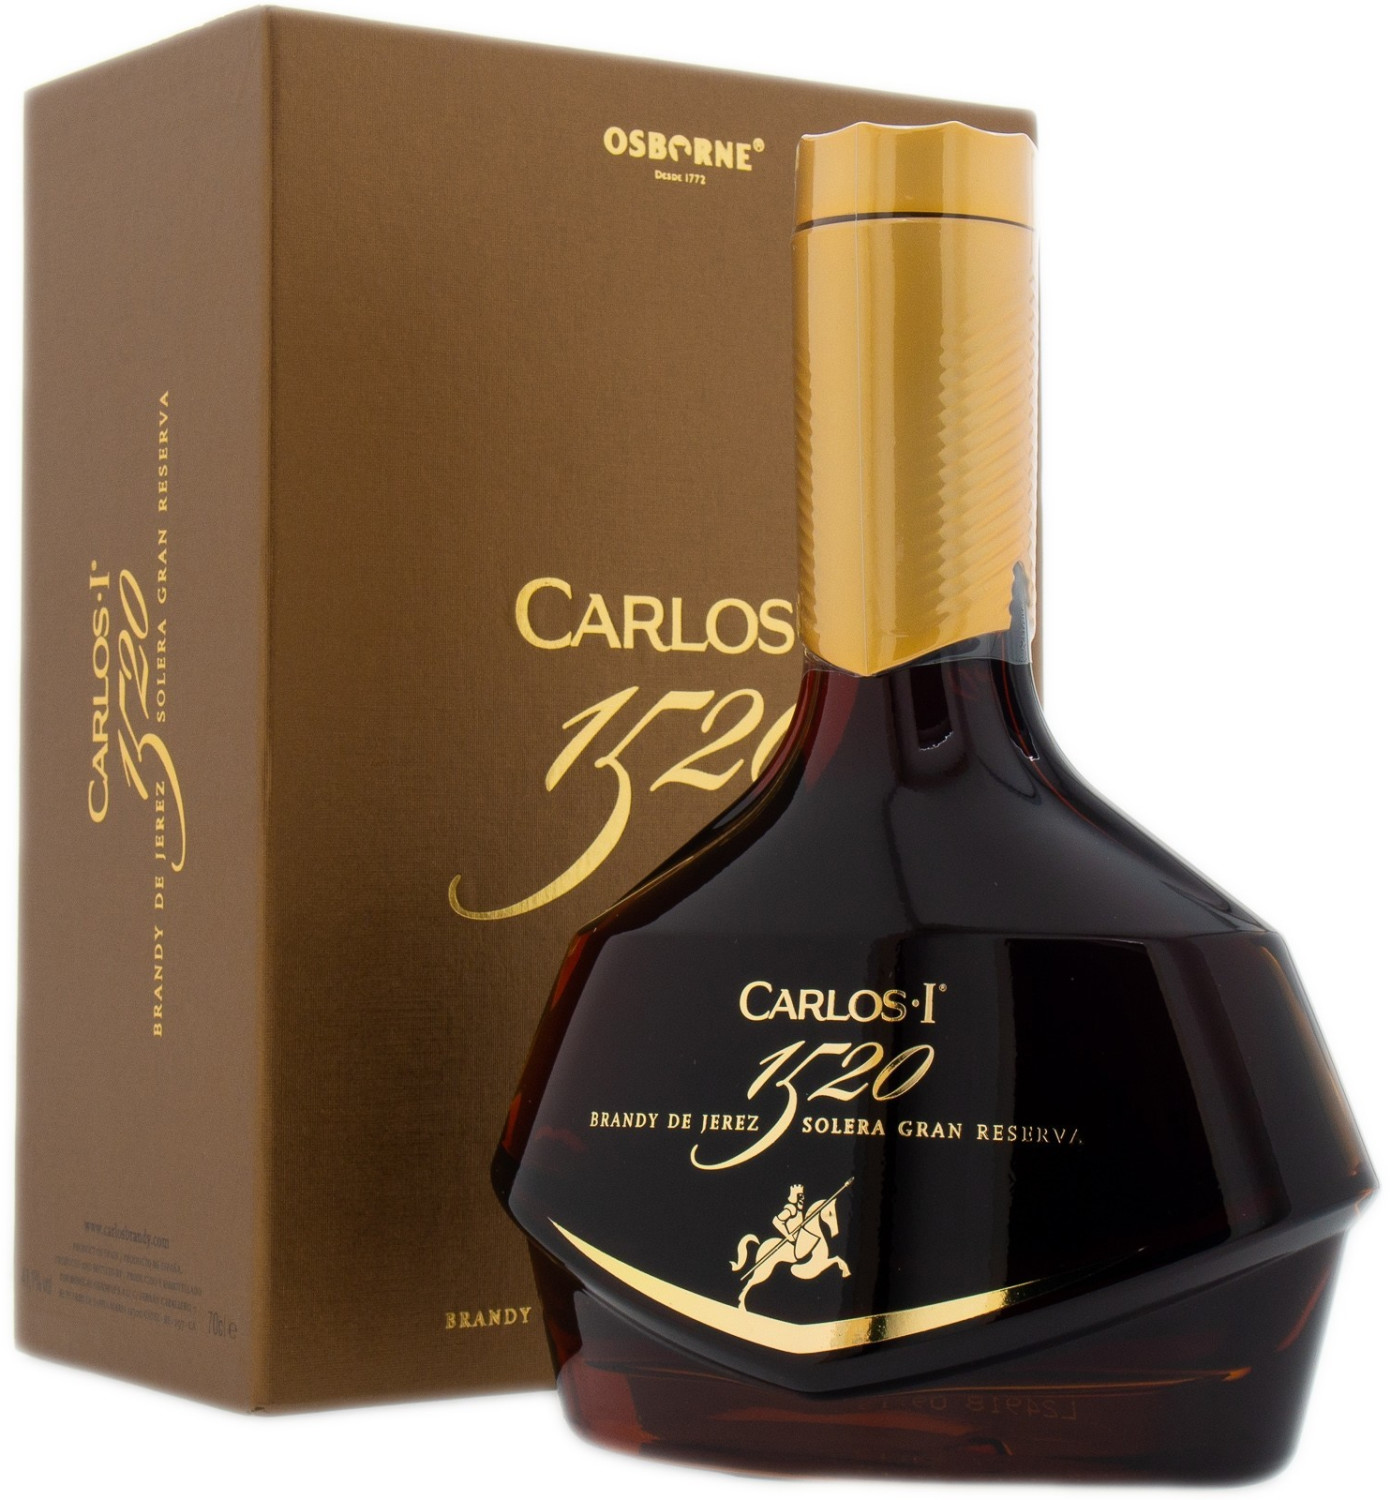 Osborne 1520 Brandy de Jerez Gran Reserva 41,1% 0,7l ab 83,54 € |  Preisvergleich bei